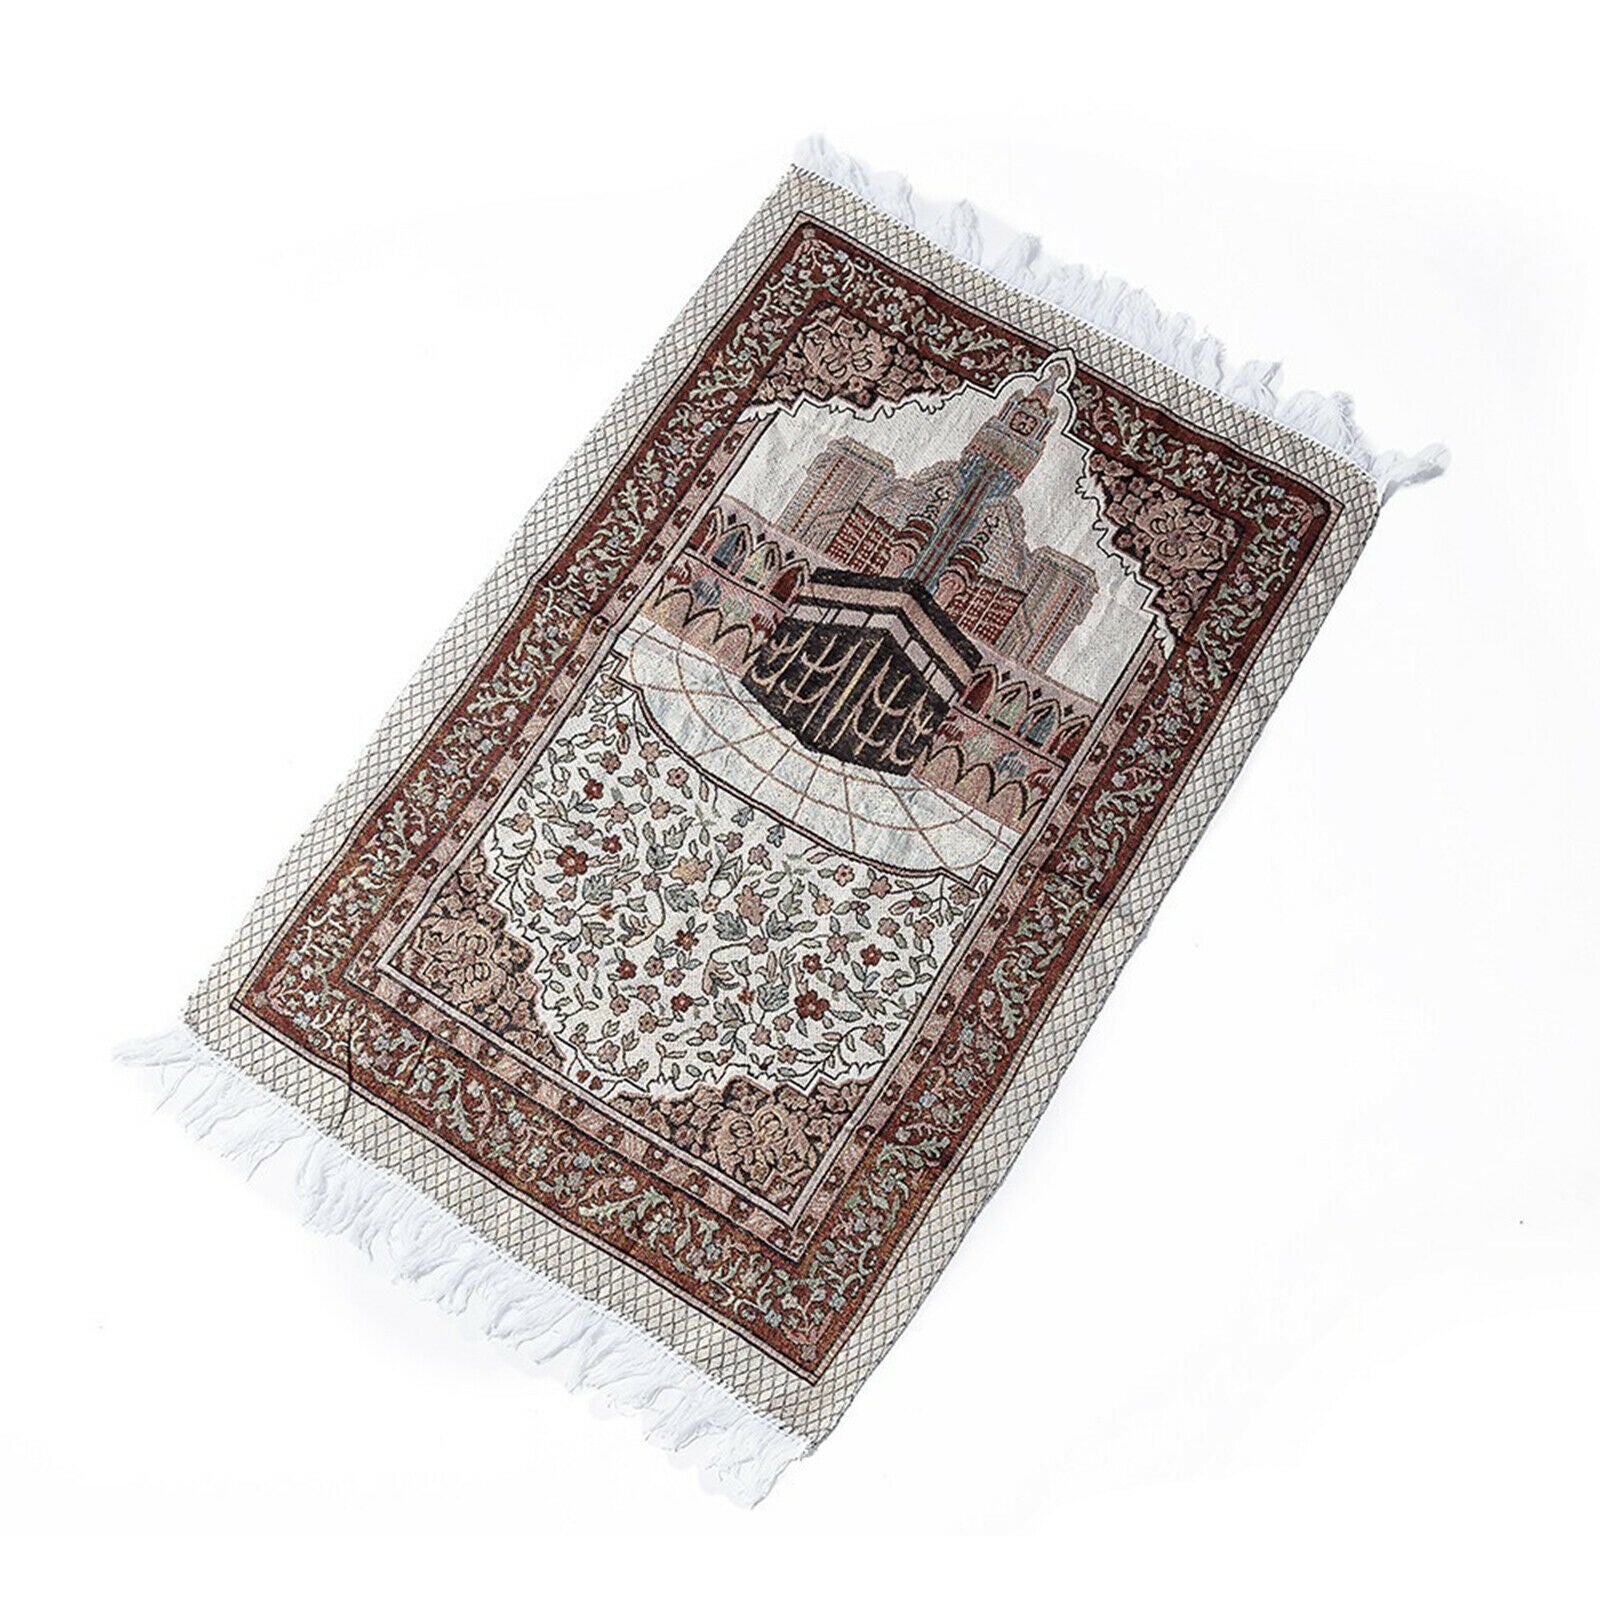 Soft Prayer Rug Mat Tassel Trim Floor Carpet Tapestry with Storage Bag